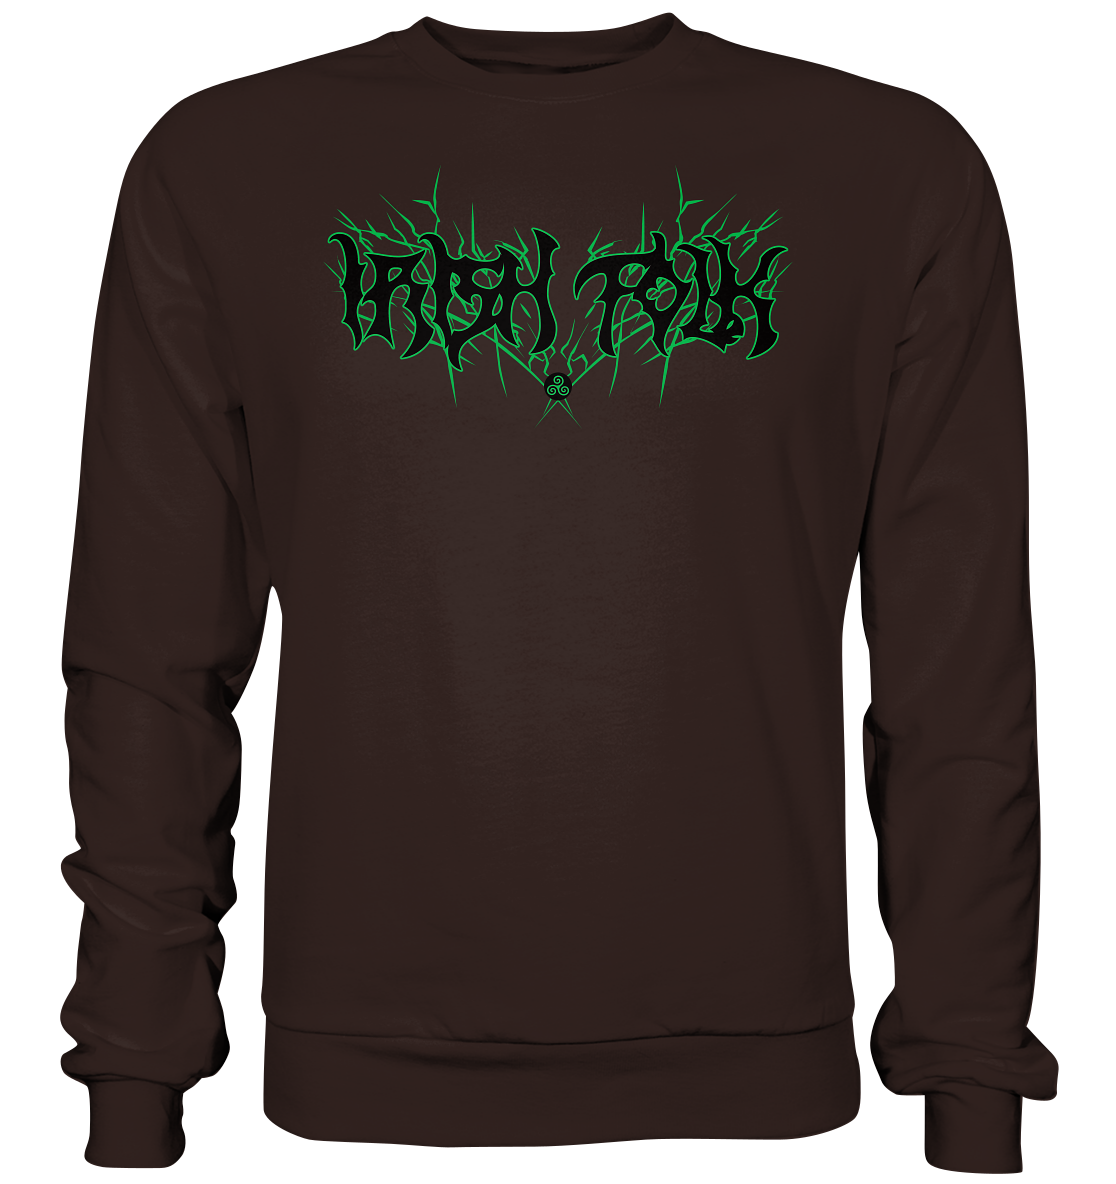 Irish Folk "Metal Band" - Basic Sweatshirt